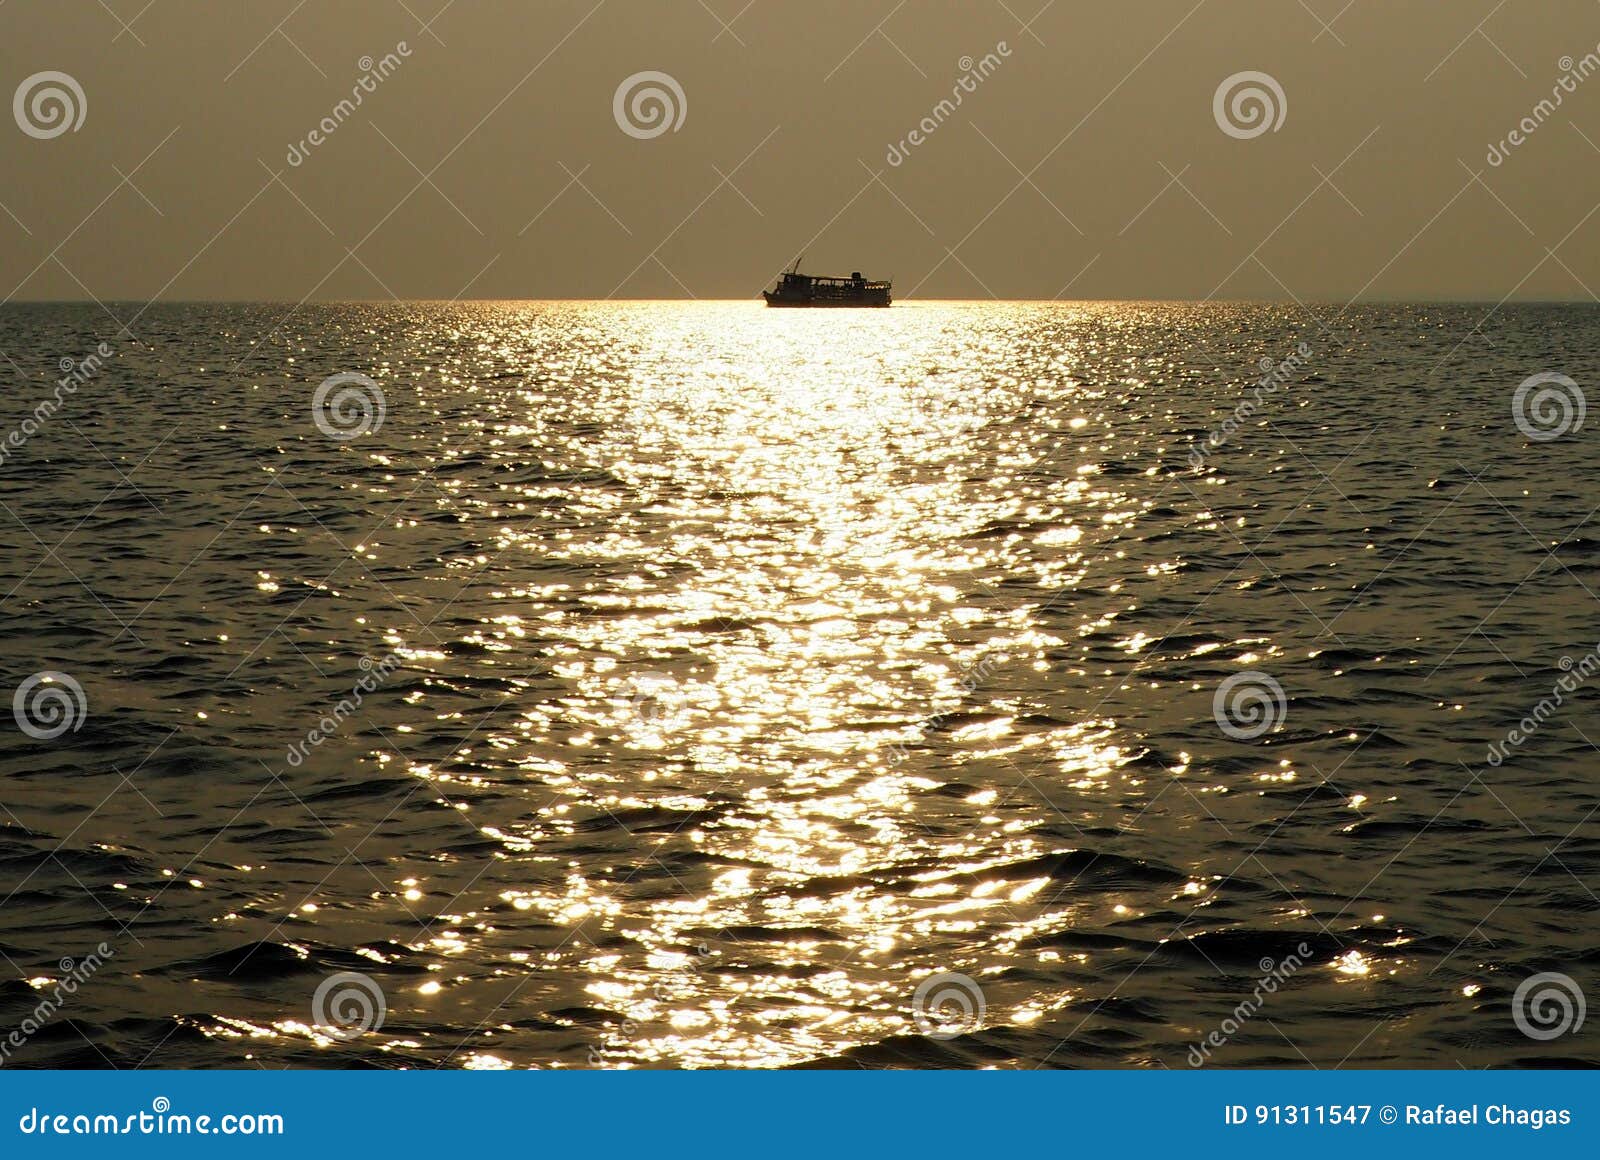 boat at sunset in tapajos river - amazon / brazil